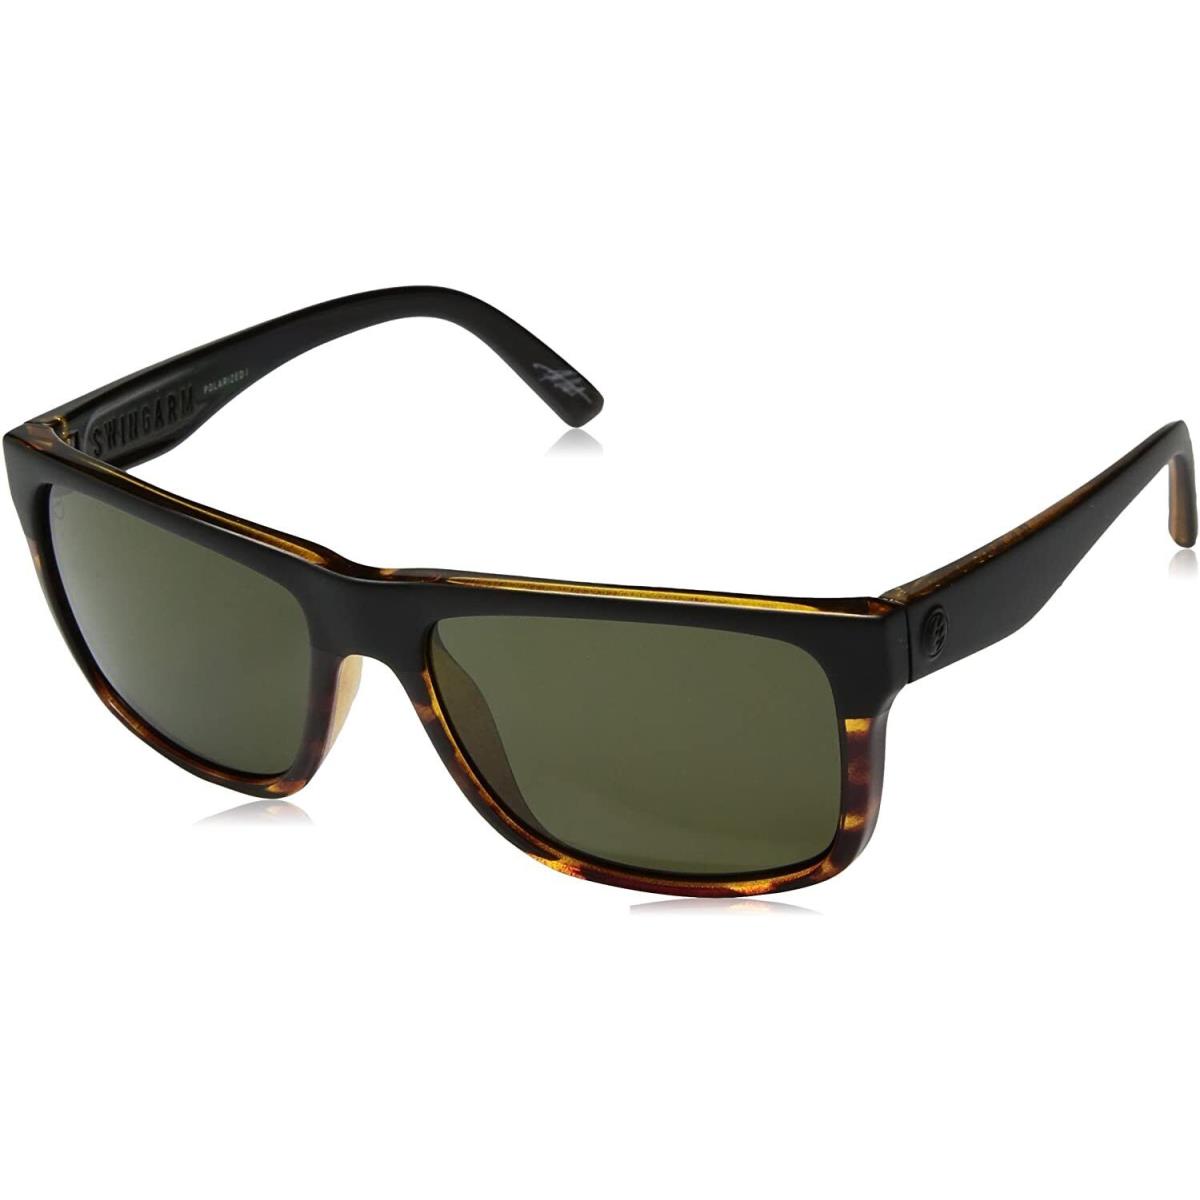 Electric Swingarm Sunglasses Darkside Black Tortoise with Grey Polarized Lens - Frame: Black Tortoise, Lens: Grey Polarized